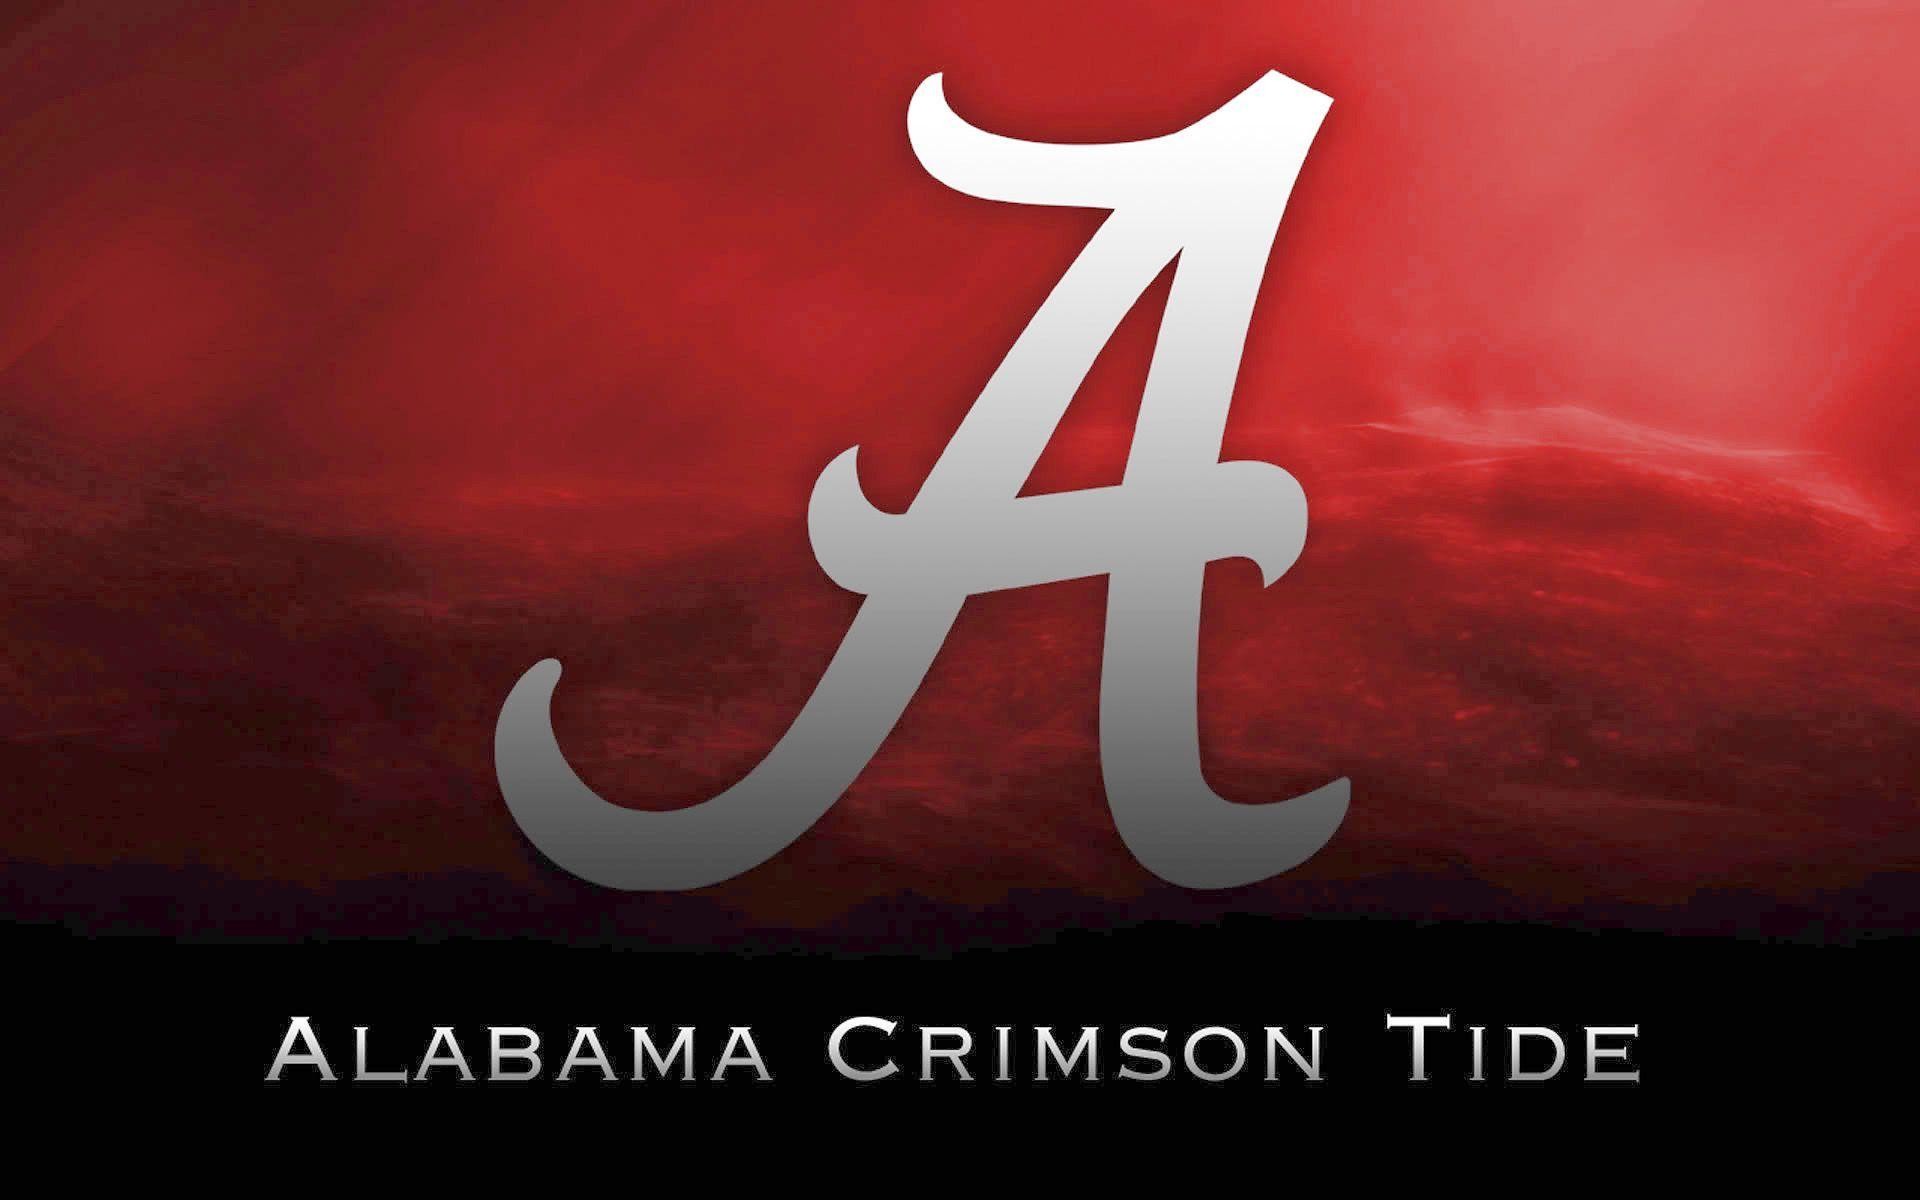 Alabama Crimson Tide Wallpaper Image